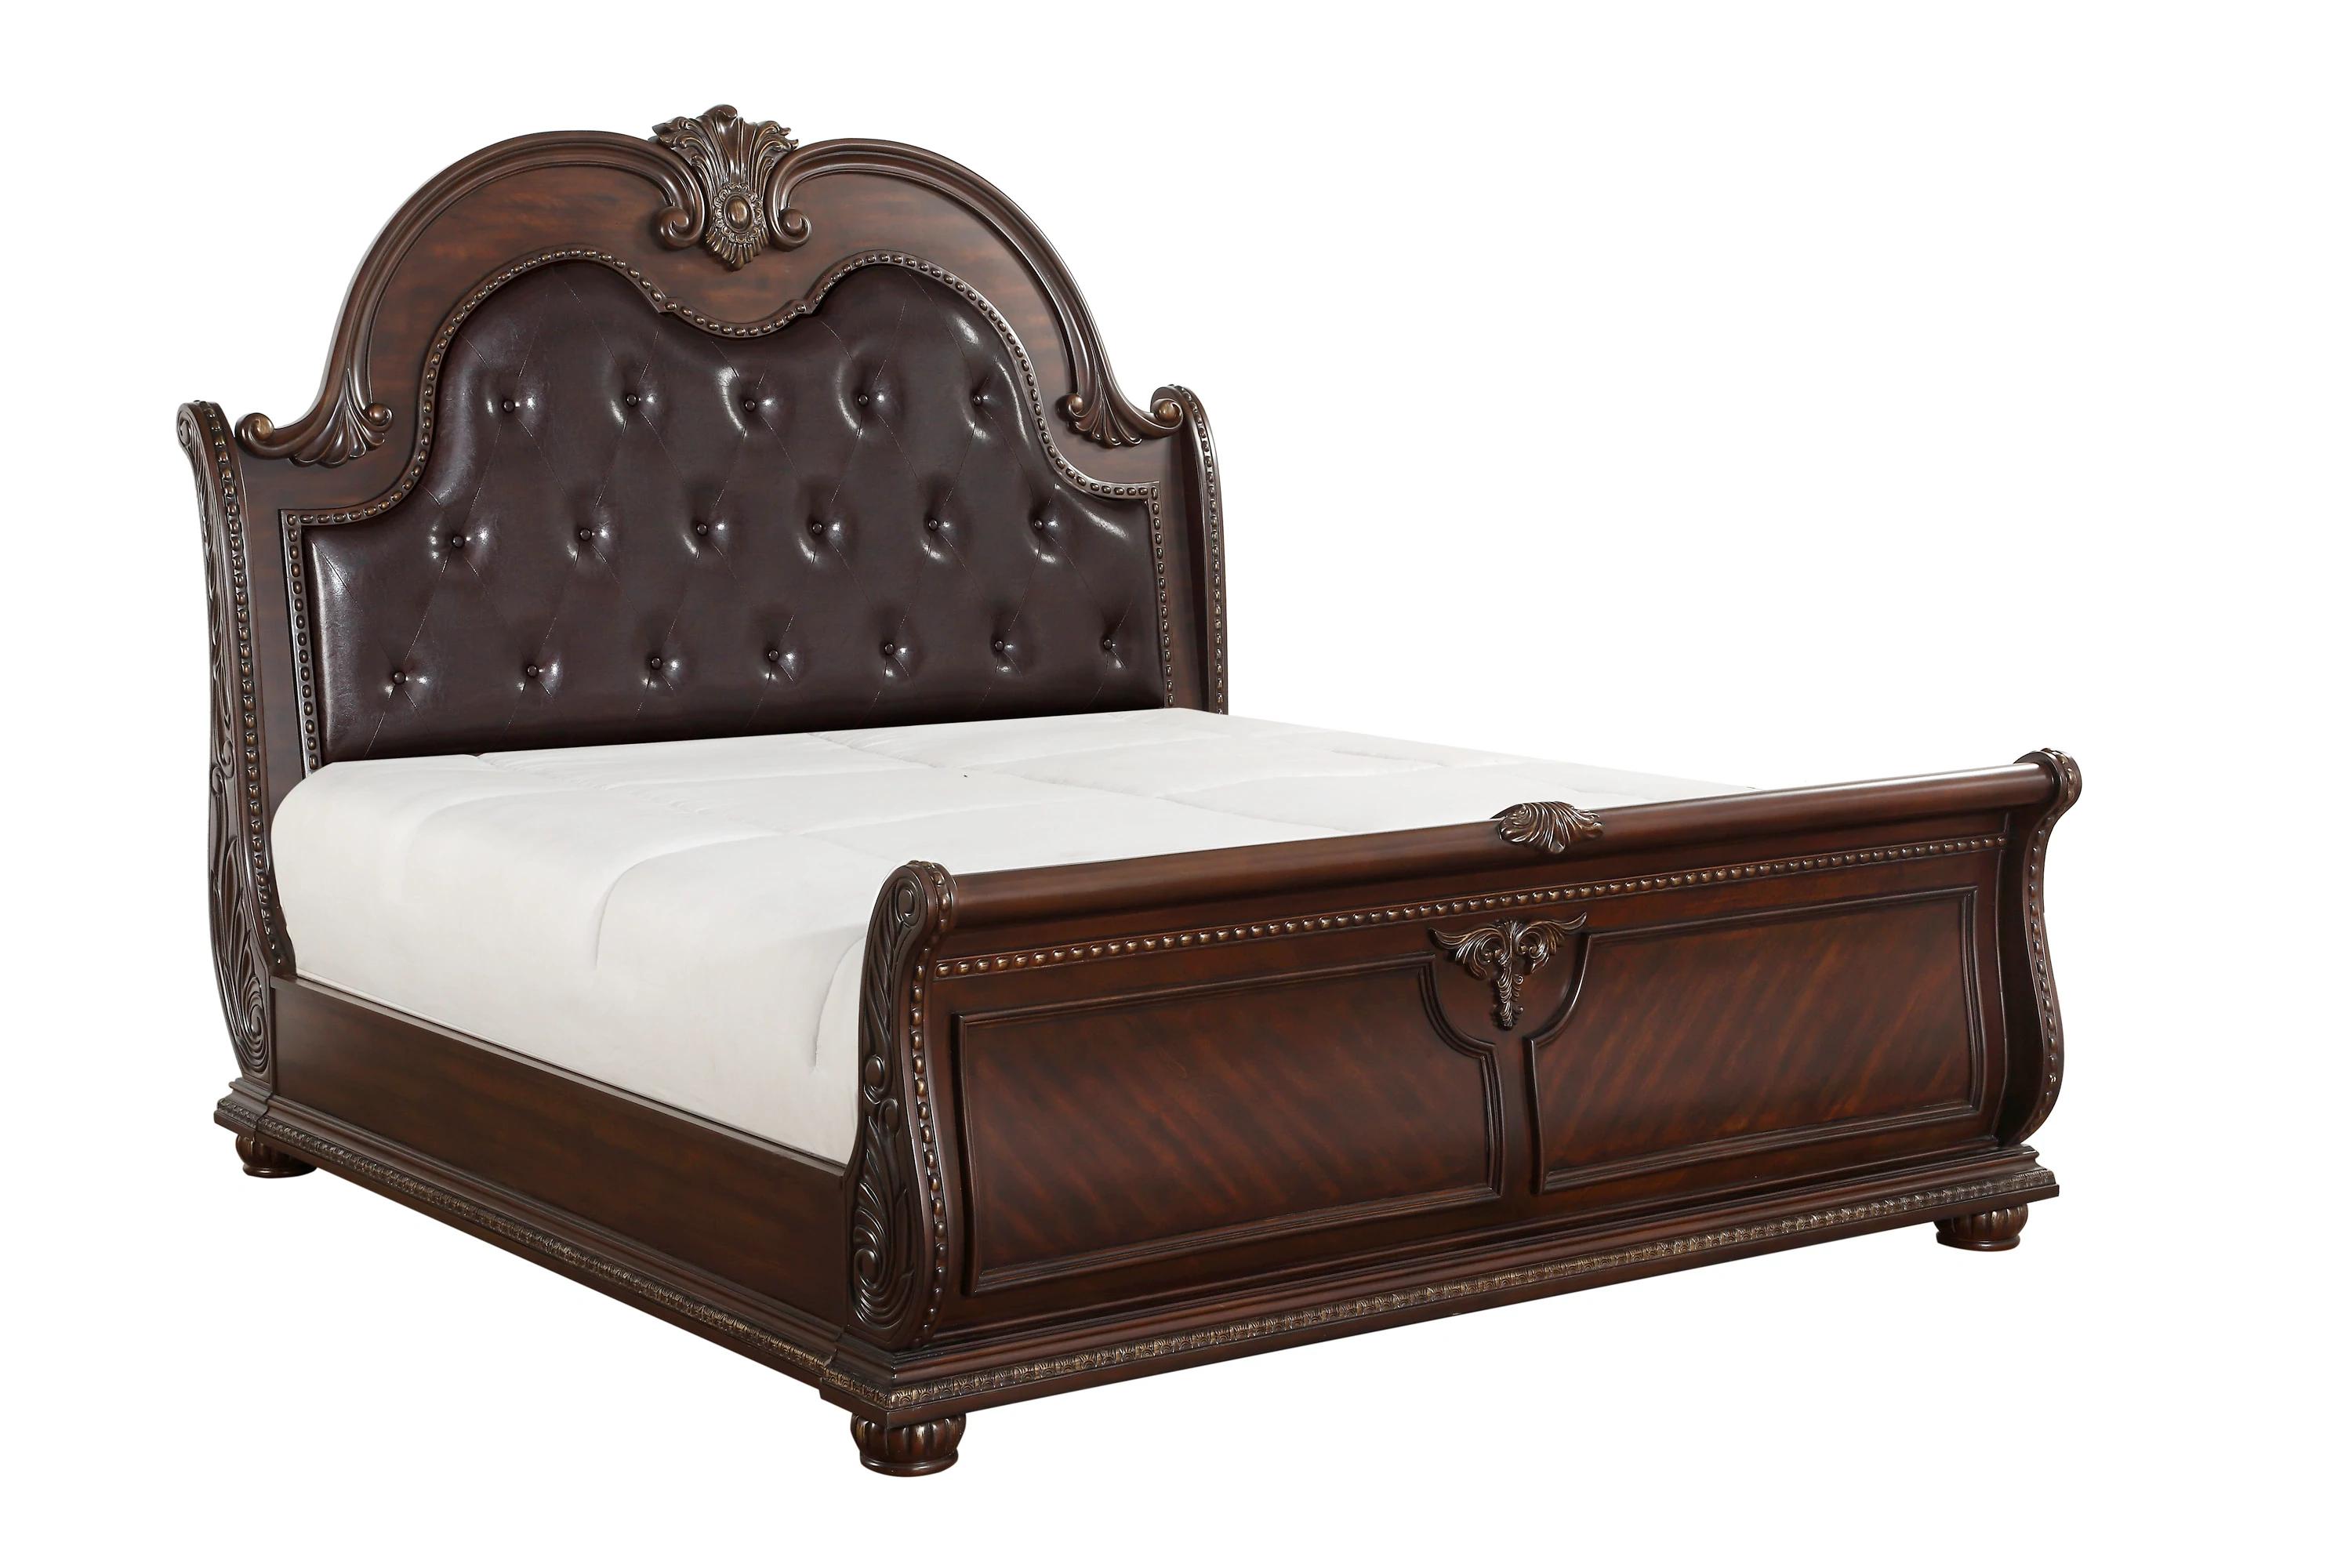 

    
Brown Panel Bedroom Set by Crown Mark Stanley B1600-Q-Bed-5pcs
